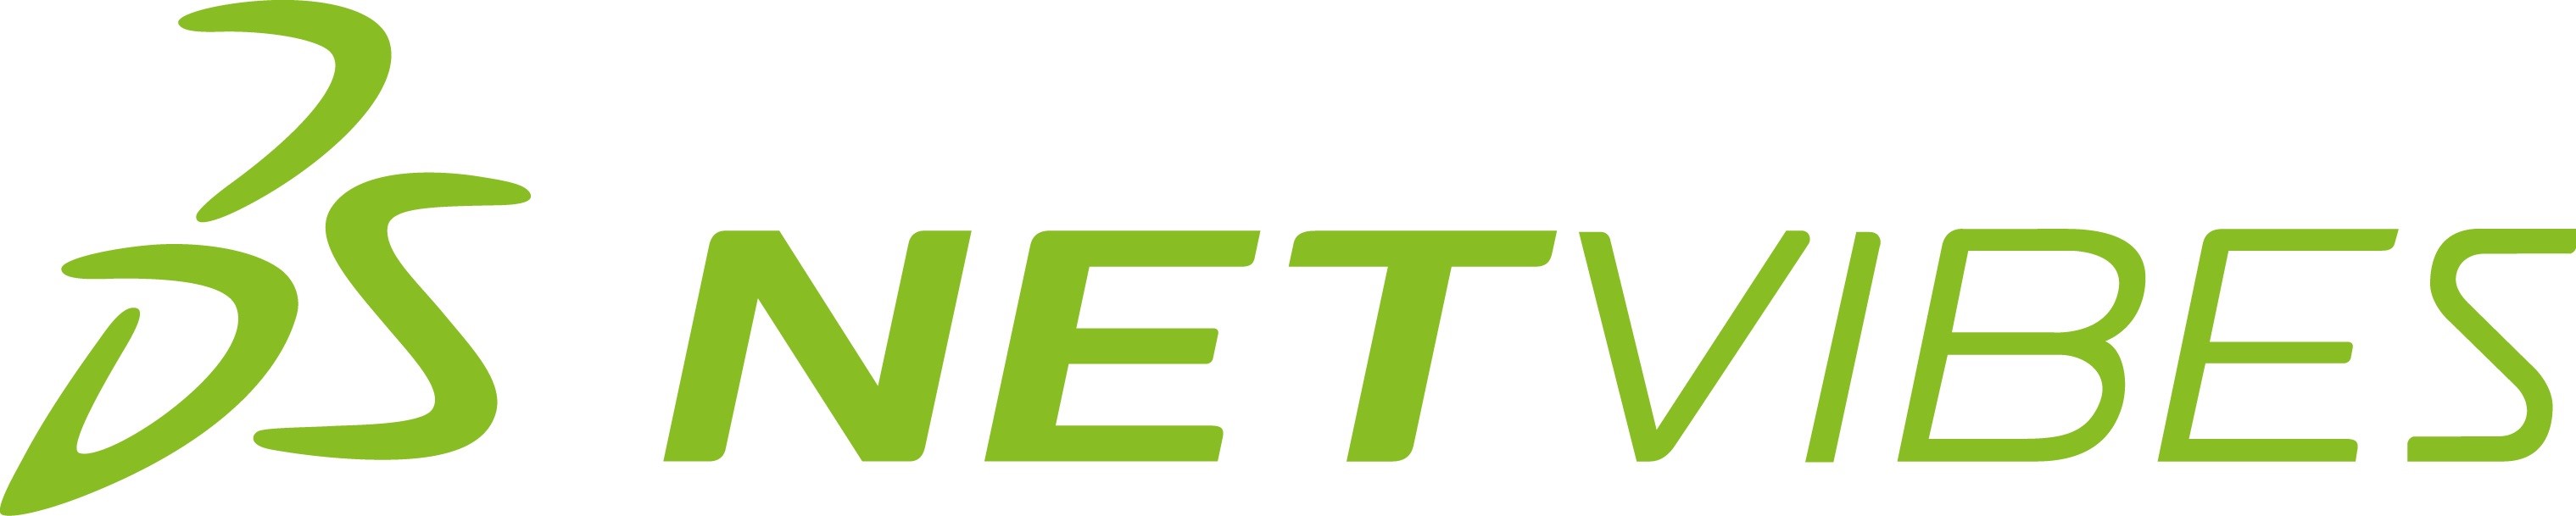 Netvibes_Logo.jpg